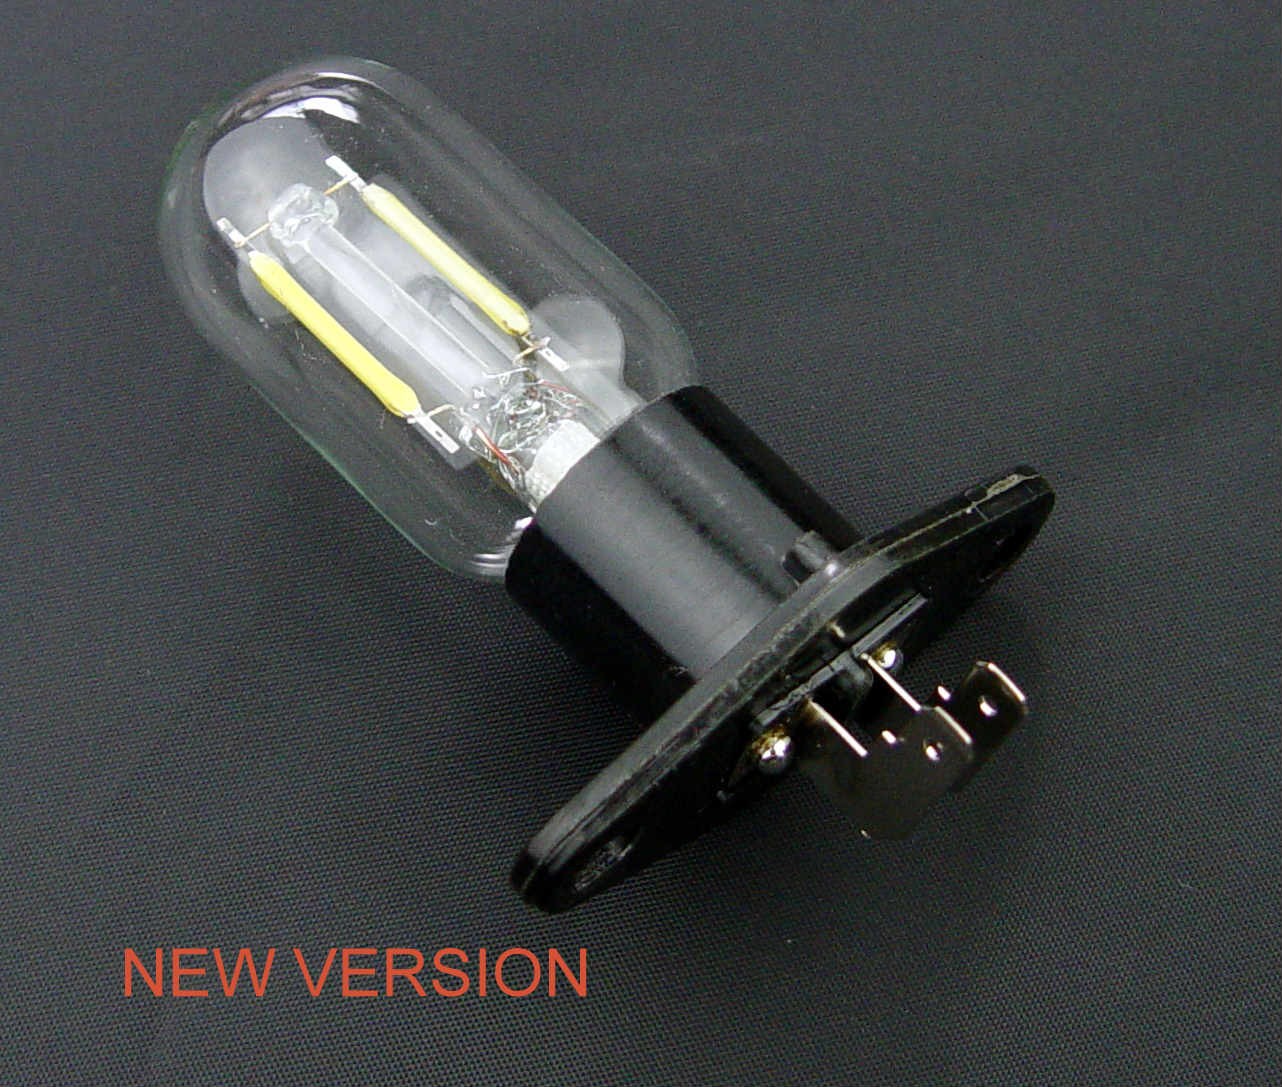 Sharp Microwave Oven Lamp Light Bulb Globe R330 R340 R350 R380 R395 R397 